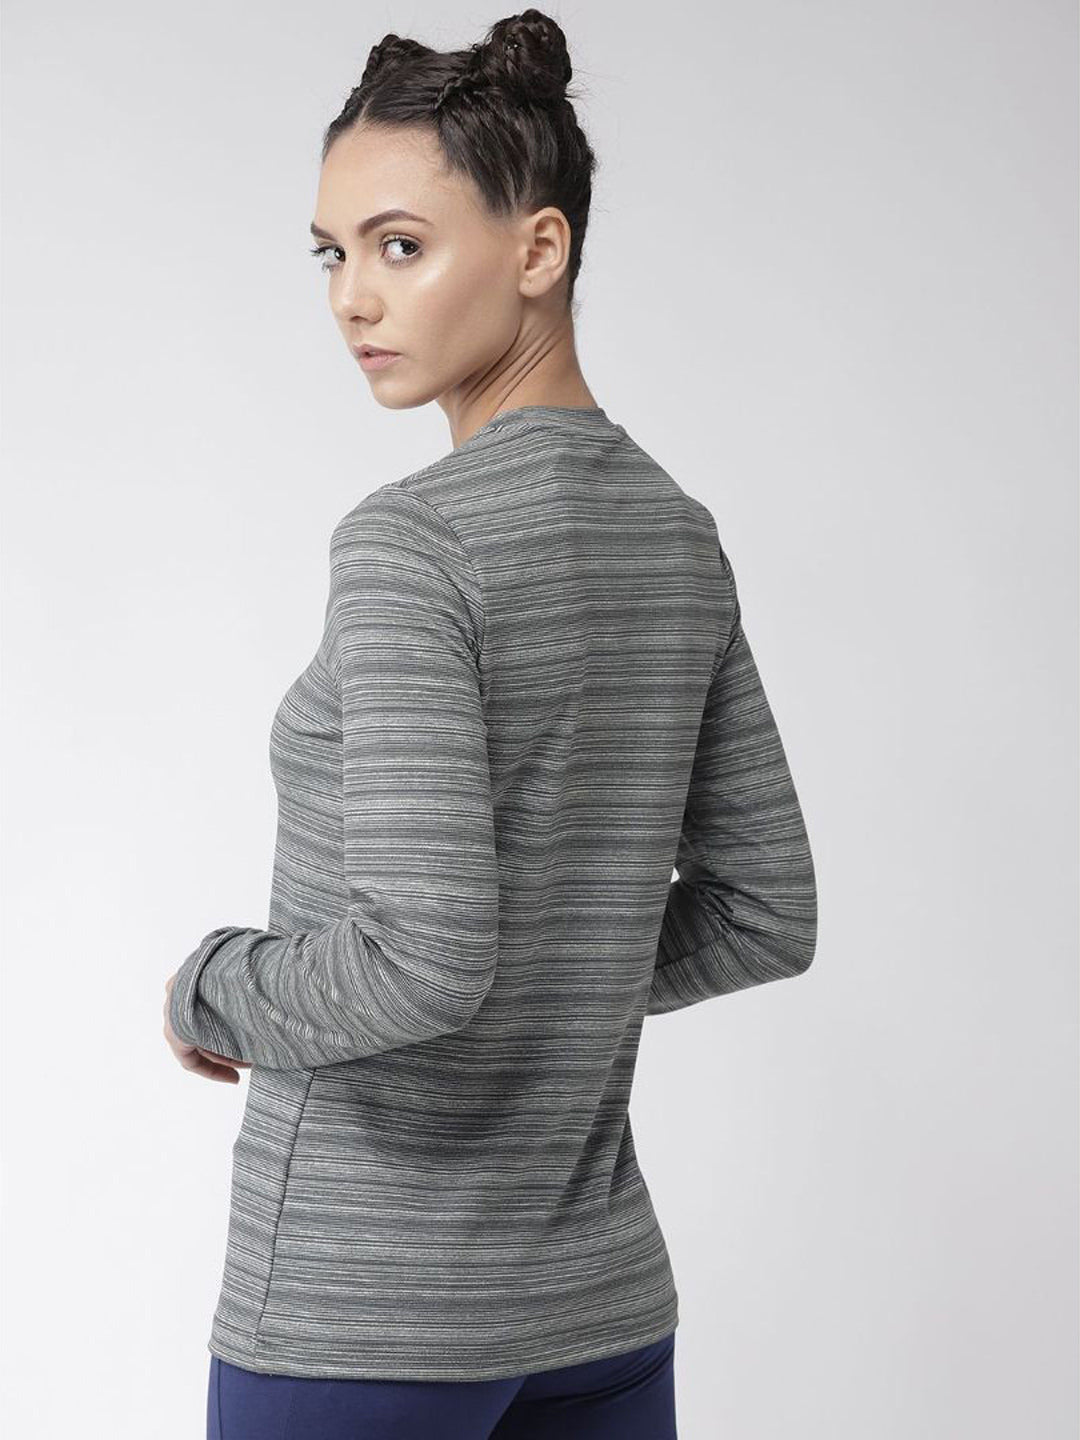 Alcis Women Grey Striped Round Neck T-shirt